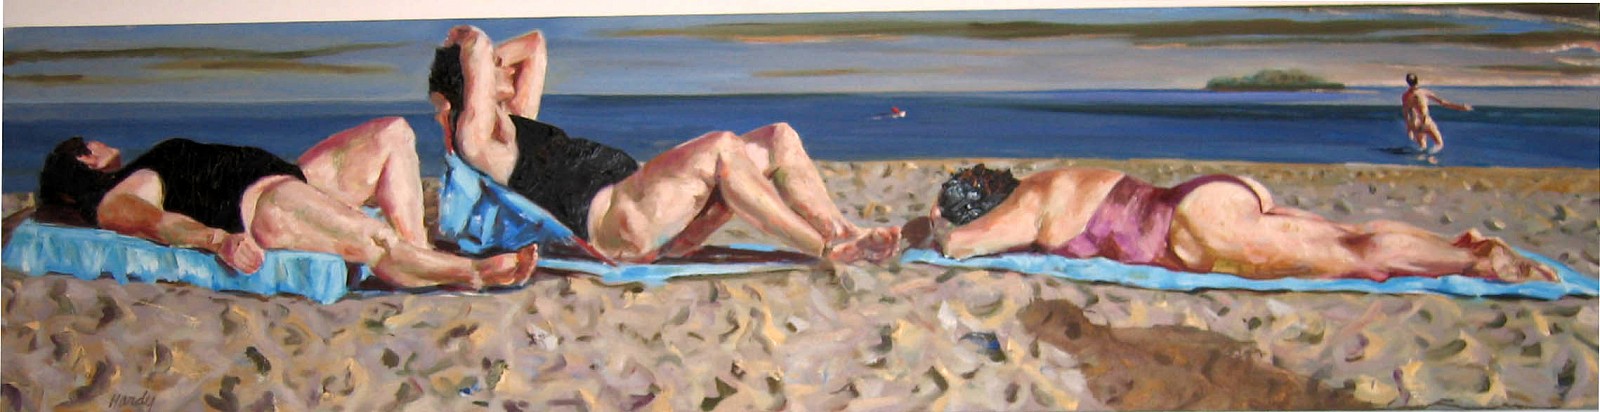 John Hardy, Beach Solitude- A Trios, 1994
Oil on Canvas, 18 x 72 inches
HARD0011